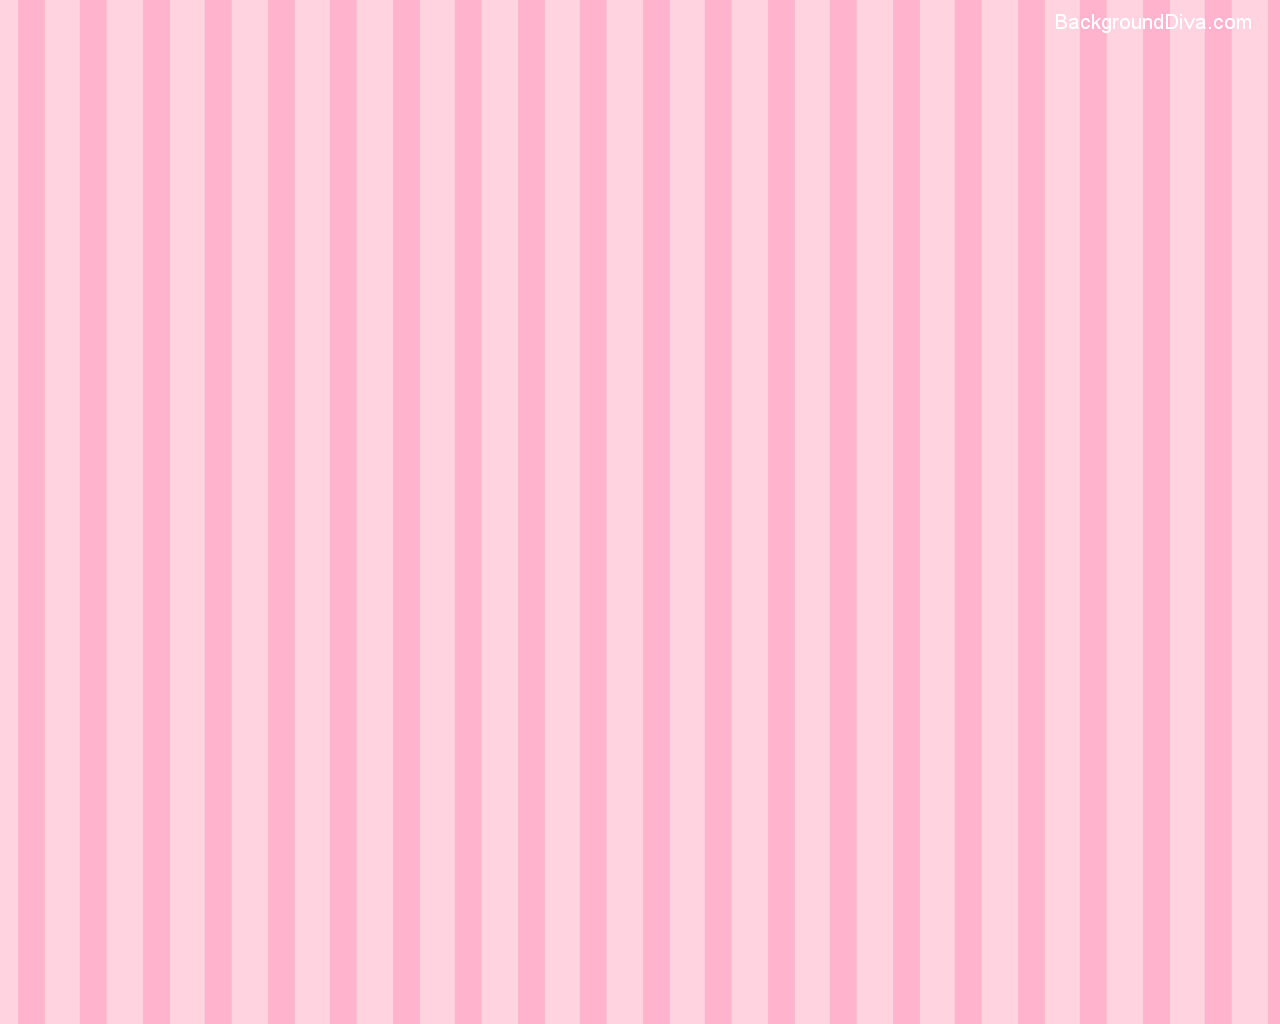 Vs Pink Background